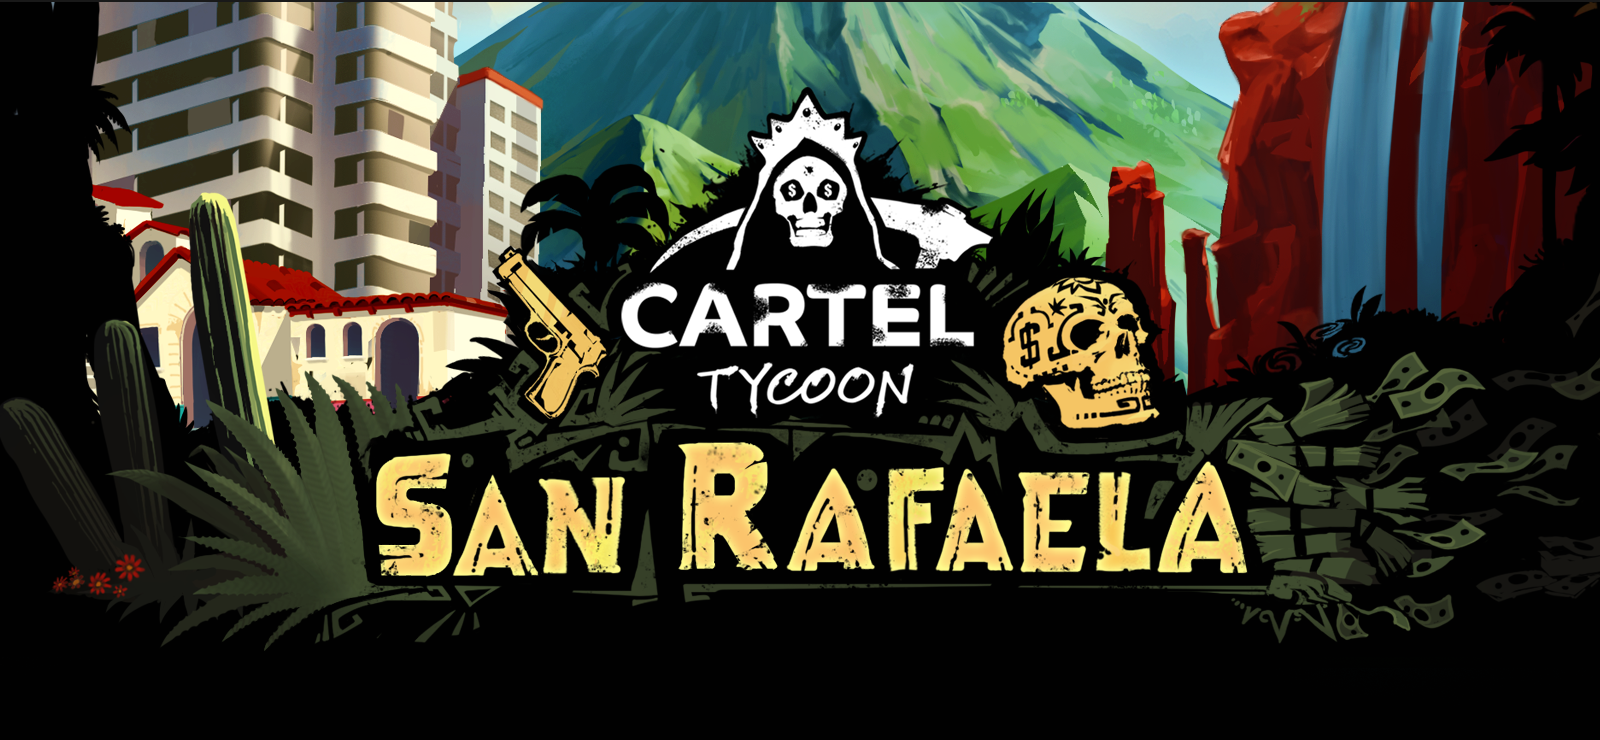 Cartel Tycoon - San Rafaela